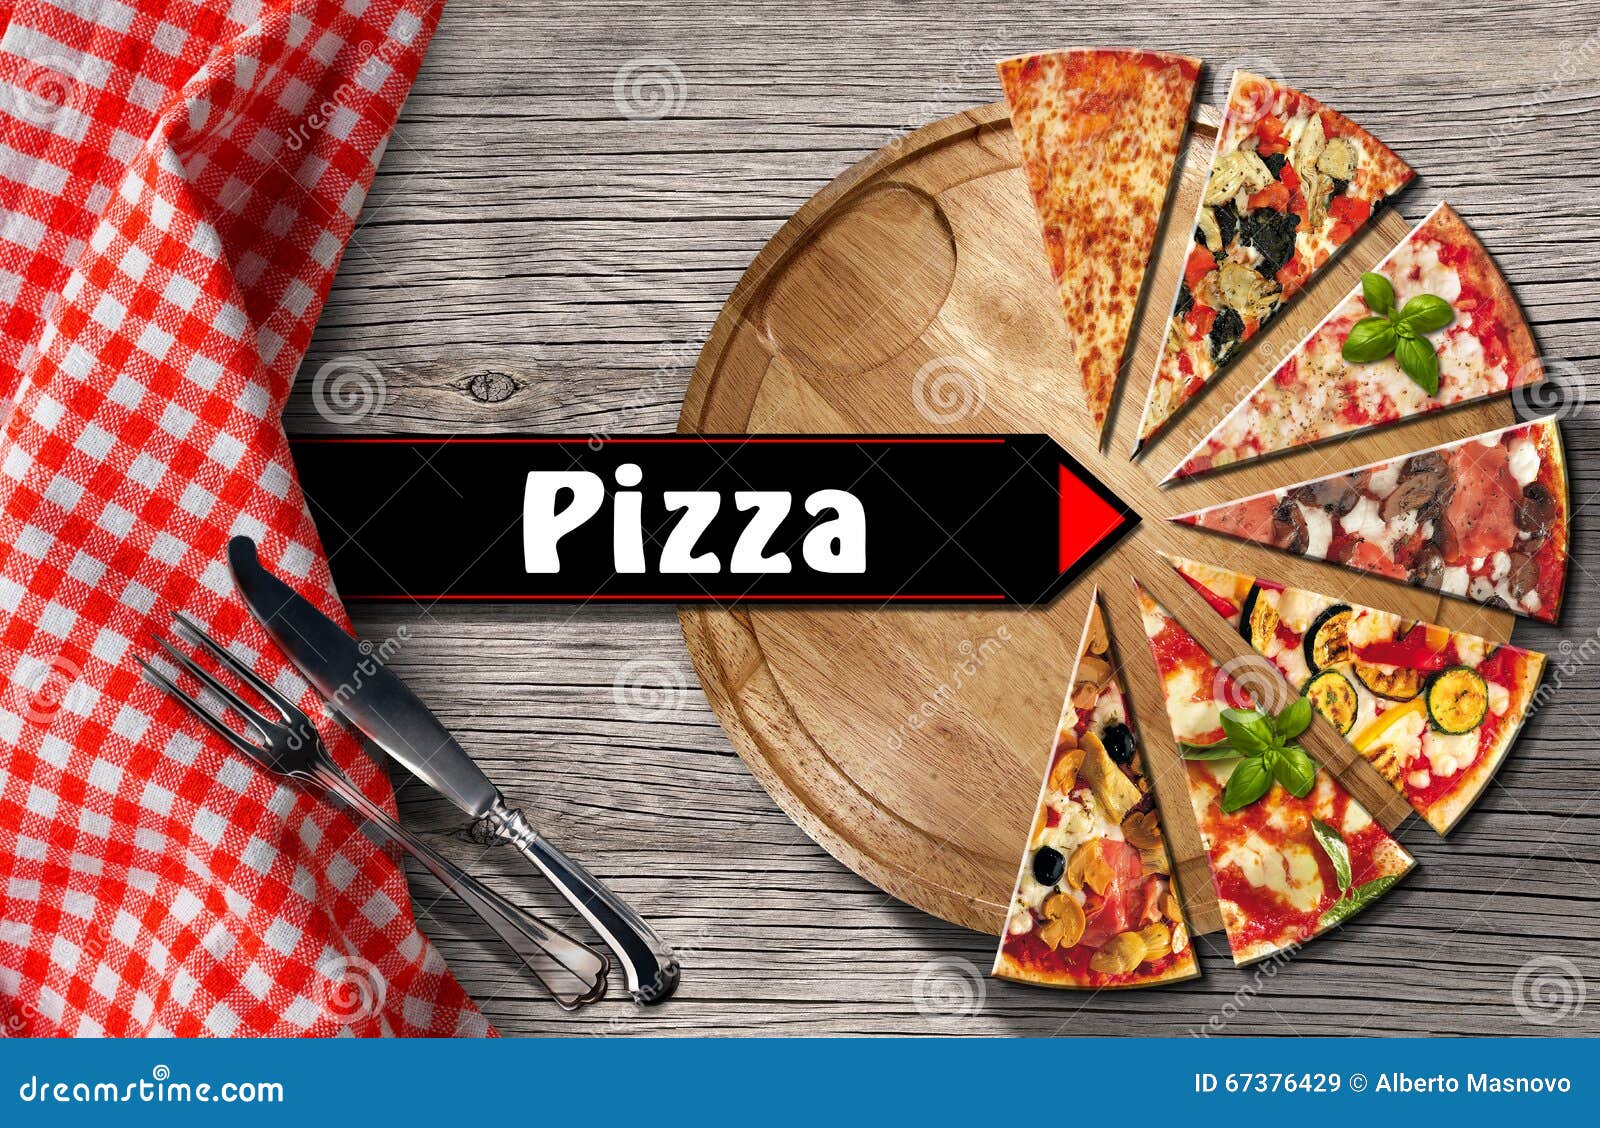 Pizza - Rustic Menu Design stock illustration ...